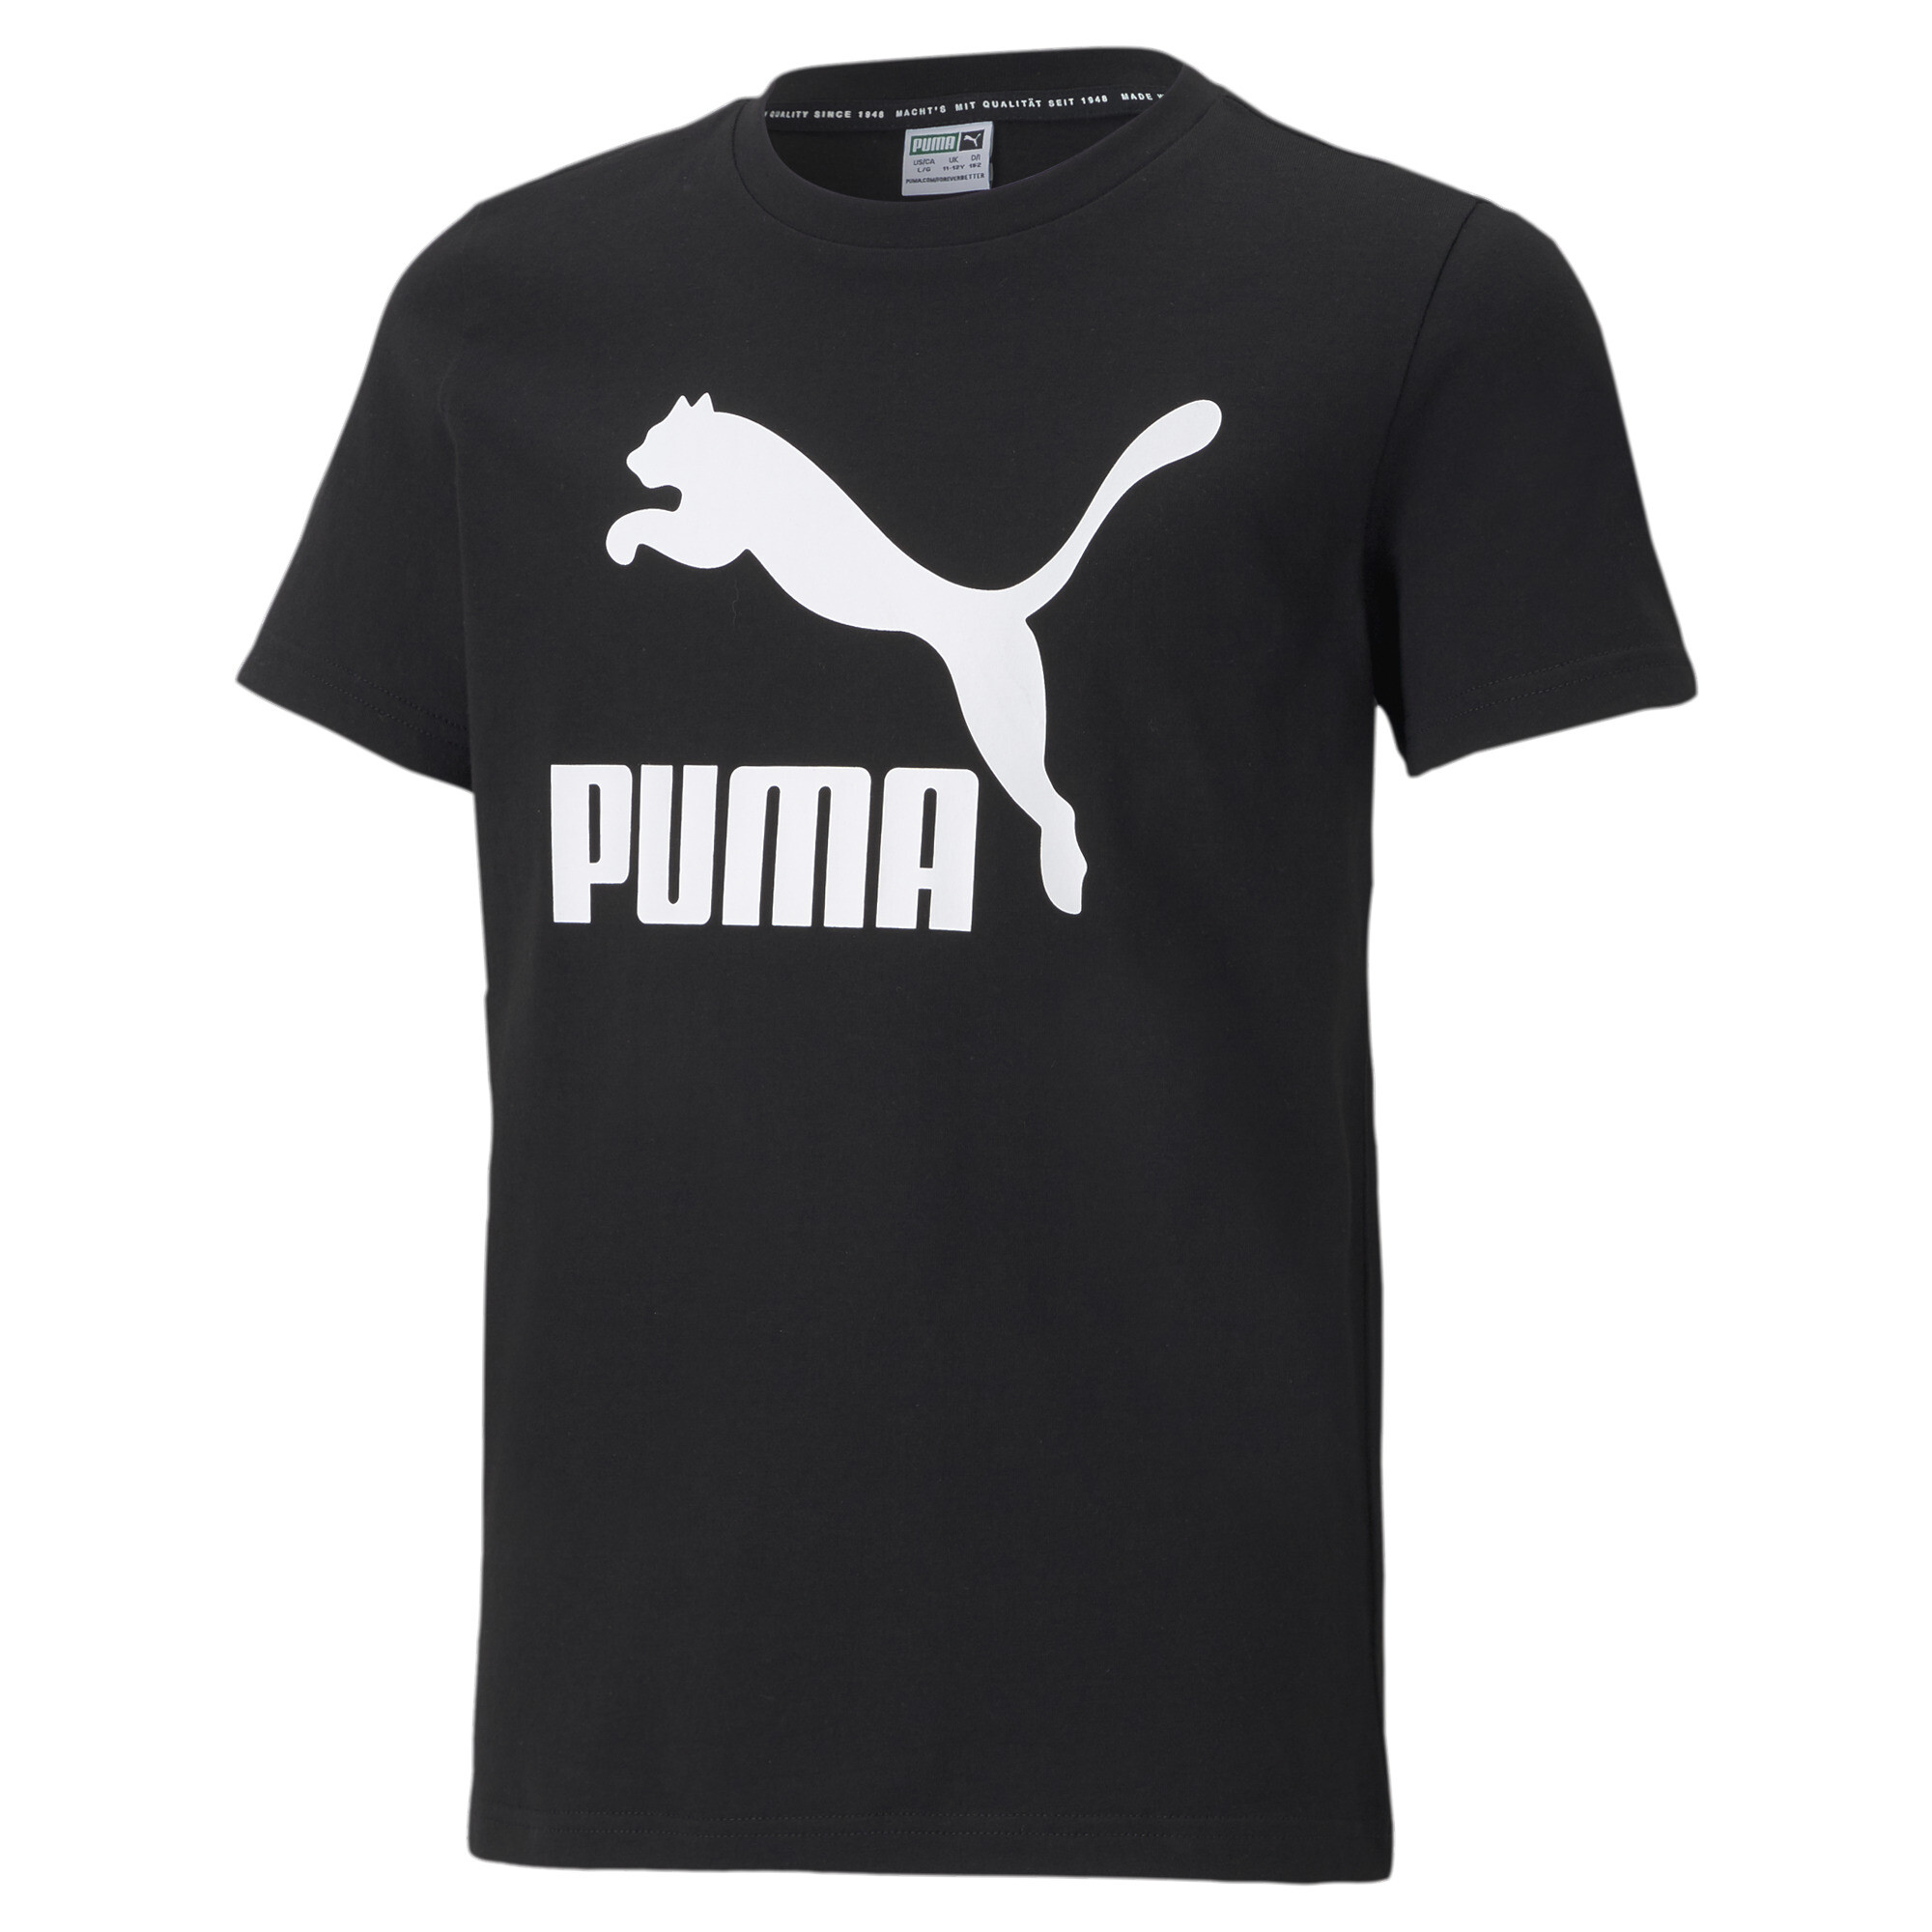 PUMA Classics B T-Shirt In Black, Size 15-16 Youth